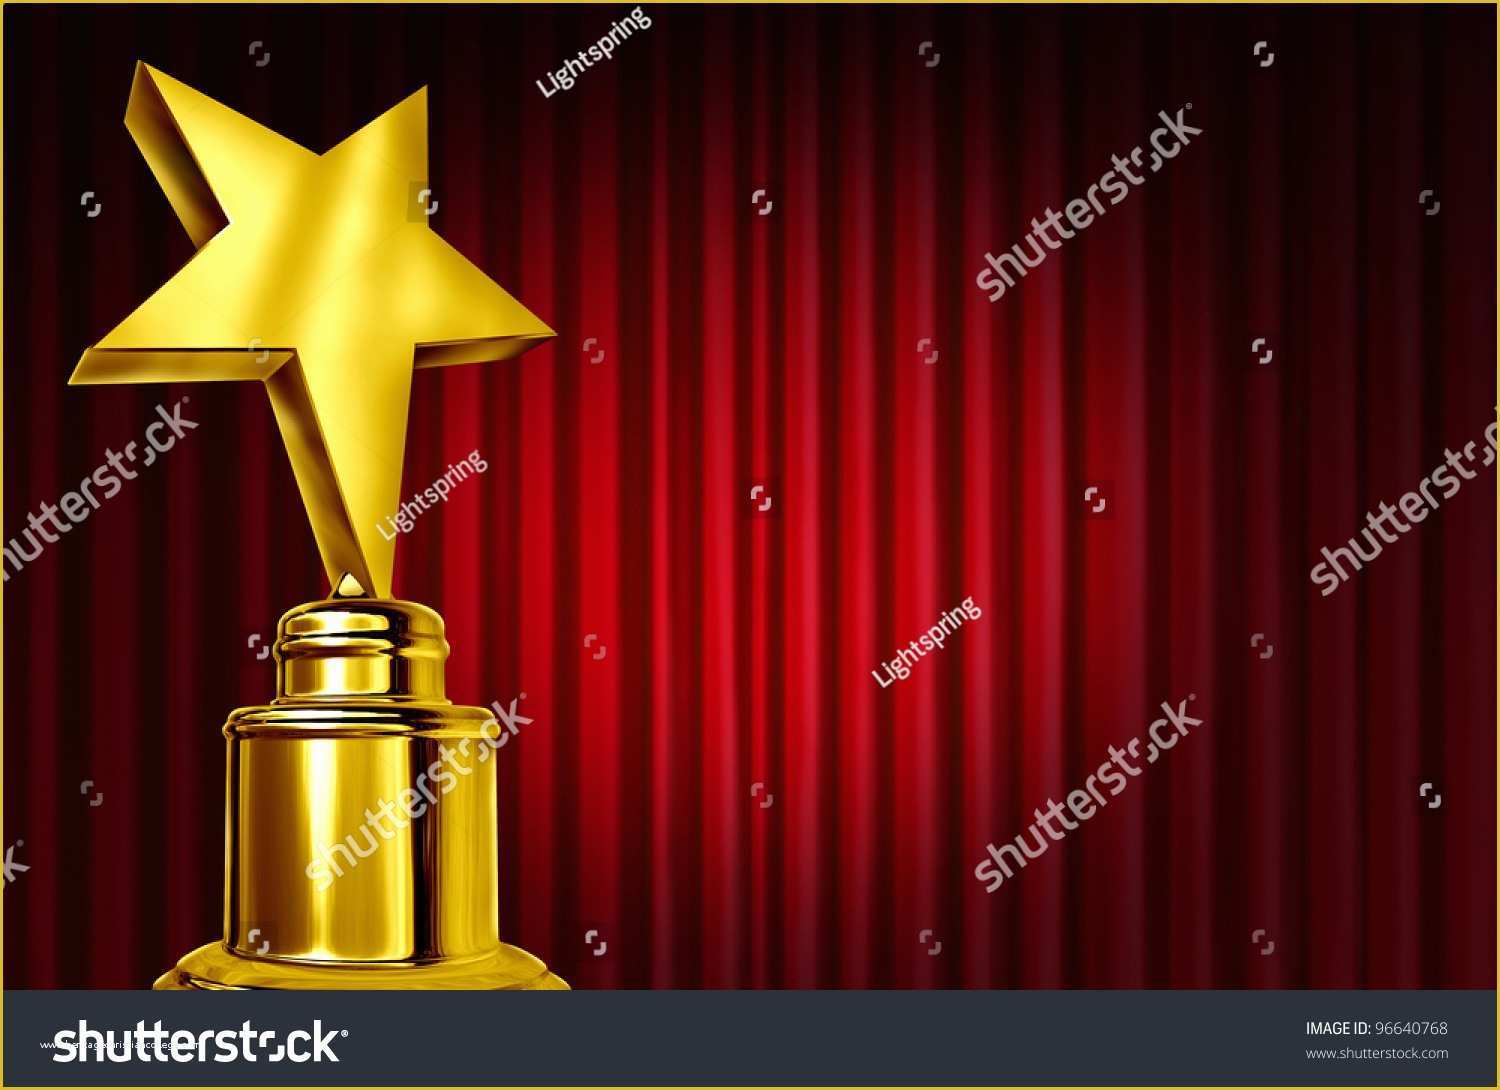 Awards Ceremony Powerpoint Template Free Of Star Award Red Curtains Velvet Stock Illustration